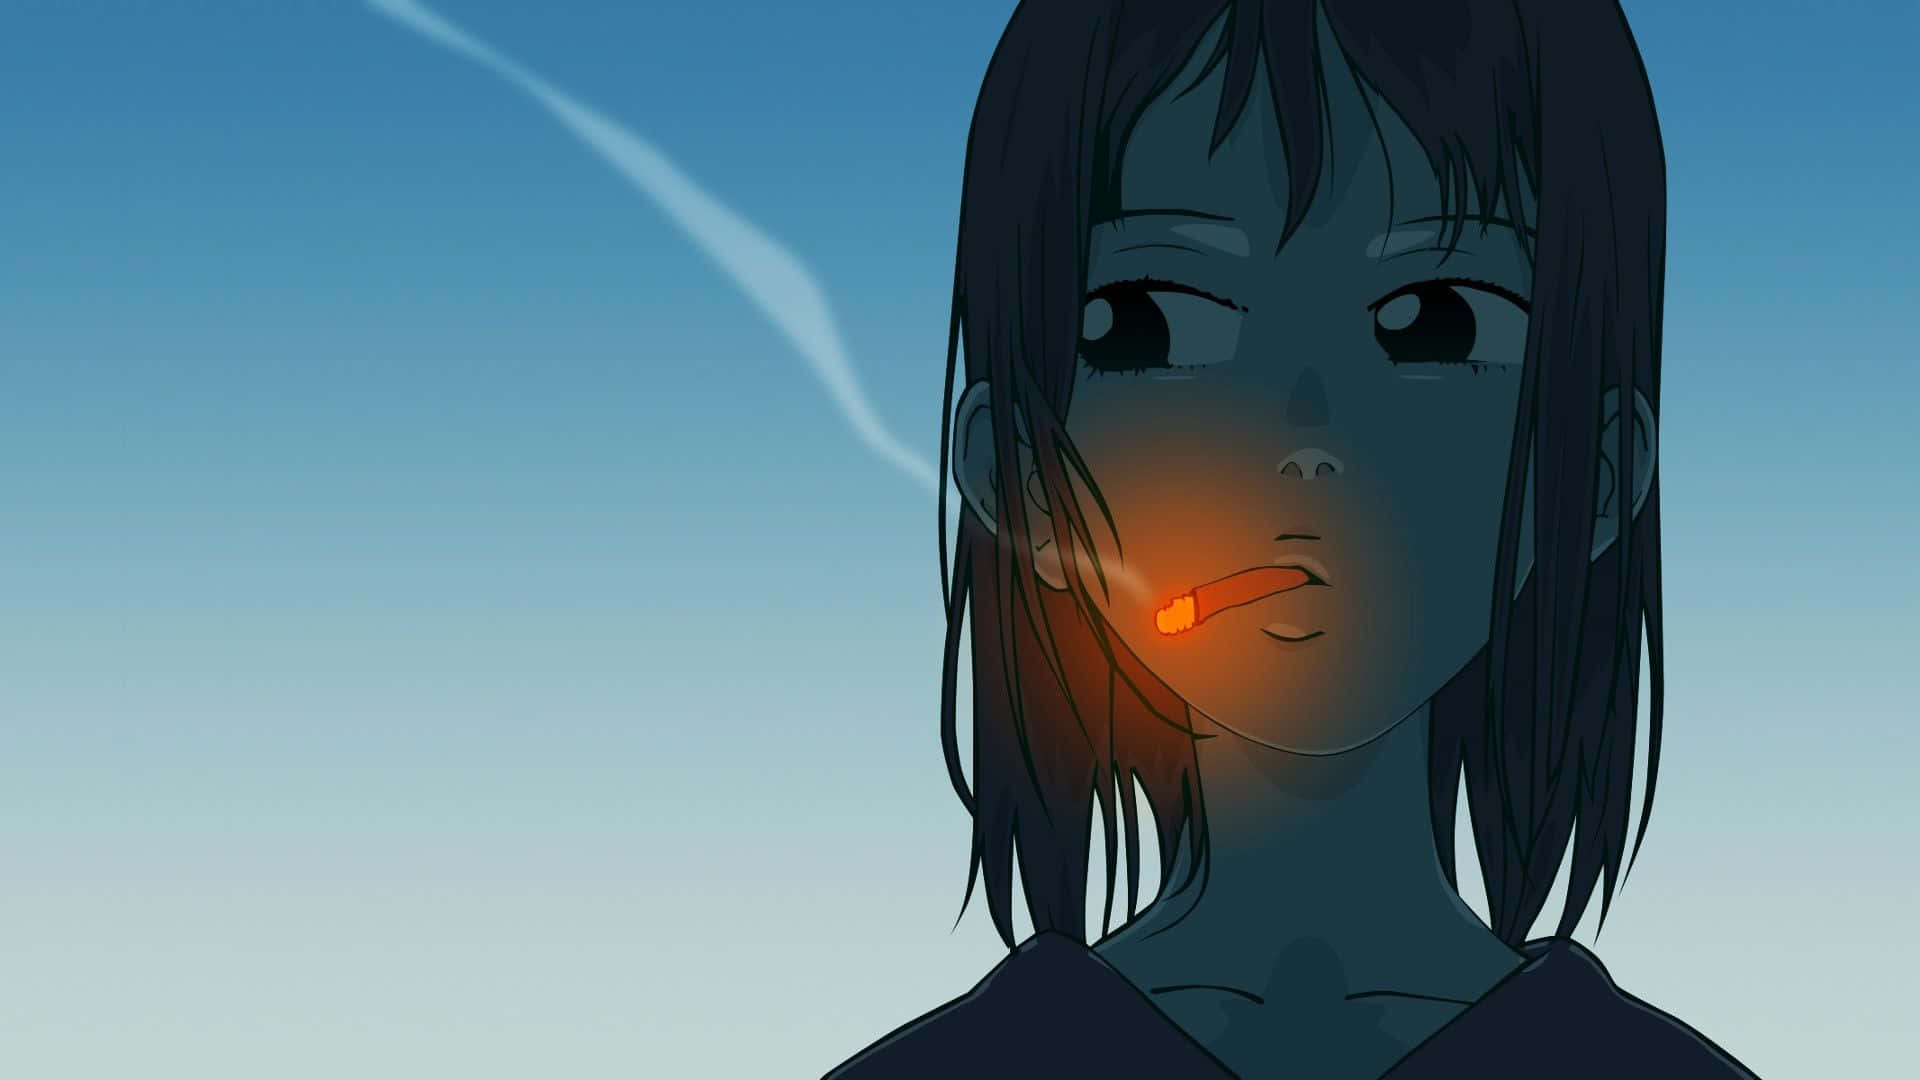 Bildskärmmed Ikonisk Blå Anime-estetik. Wallpaper